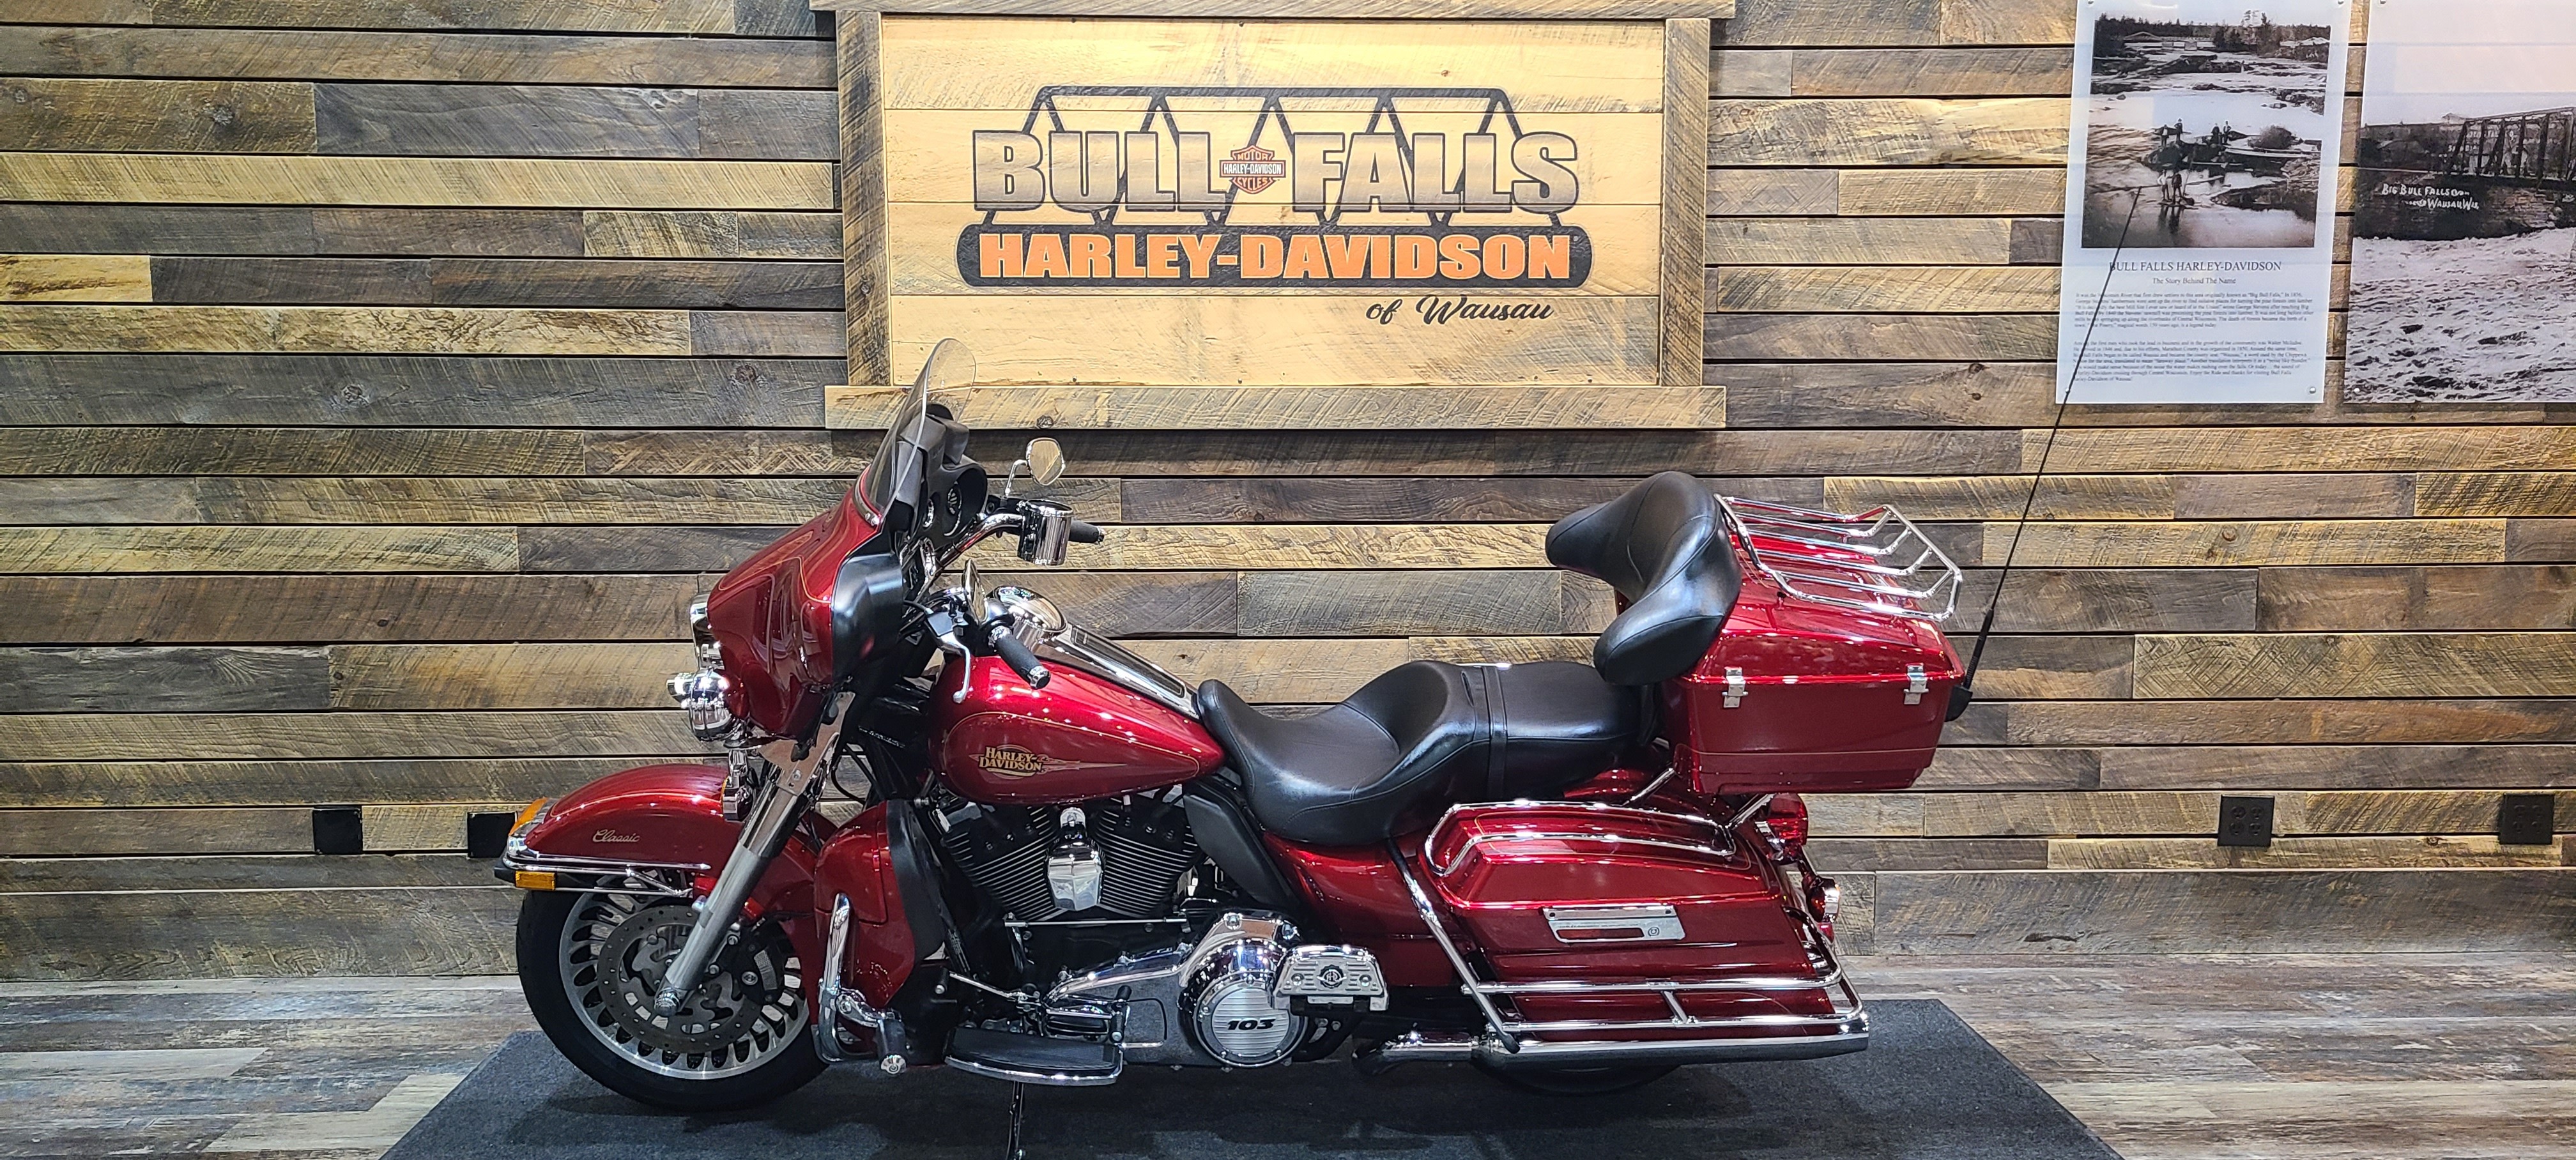 2012 Harley-Davidson Electra Glide Classic at Bull Falls Harley-Davidson